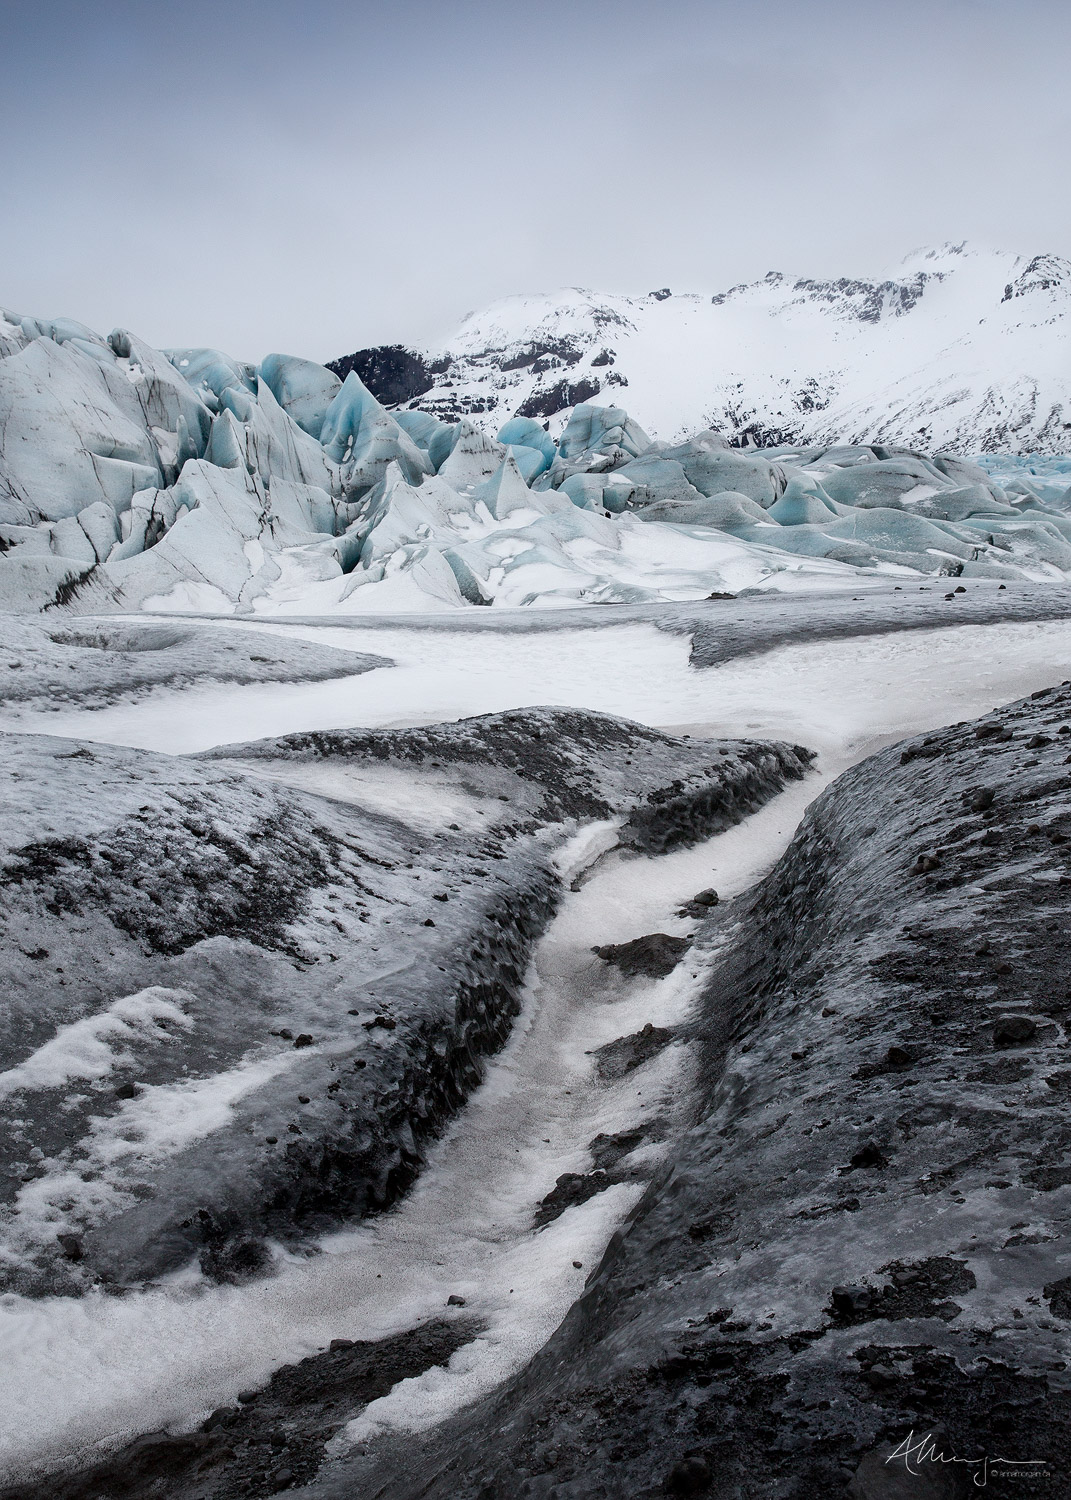 The Skaftafell glacier terminus in Vatnajokull National Park, Iceland.